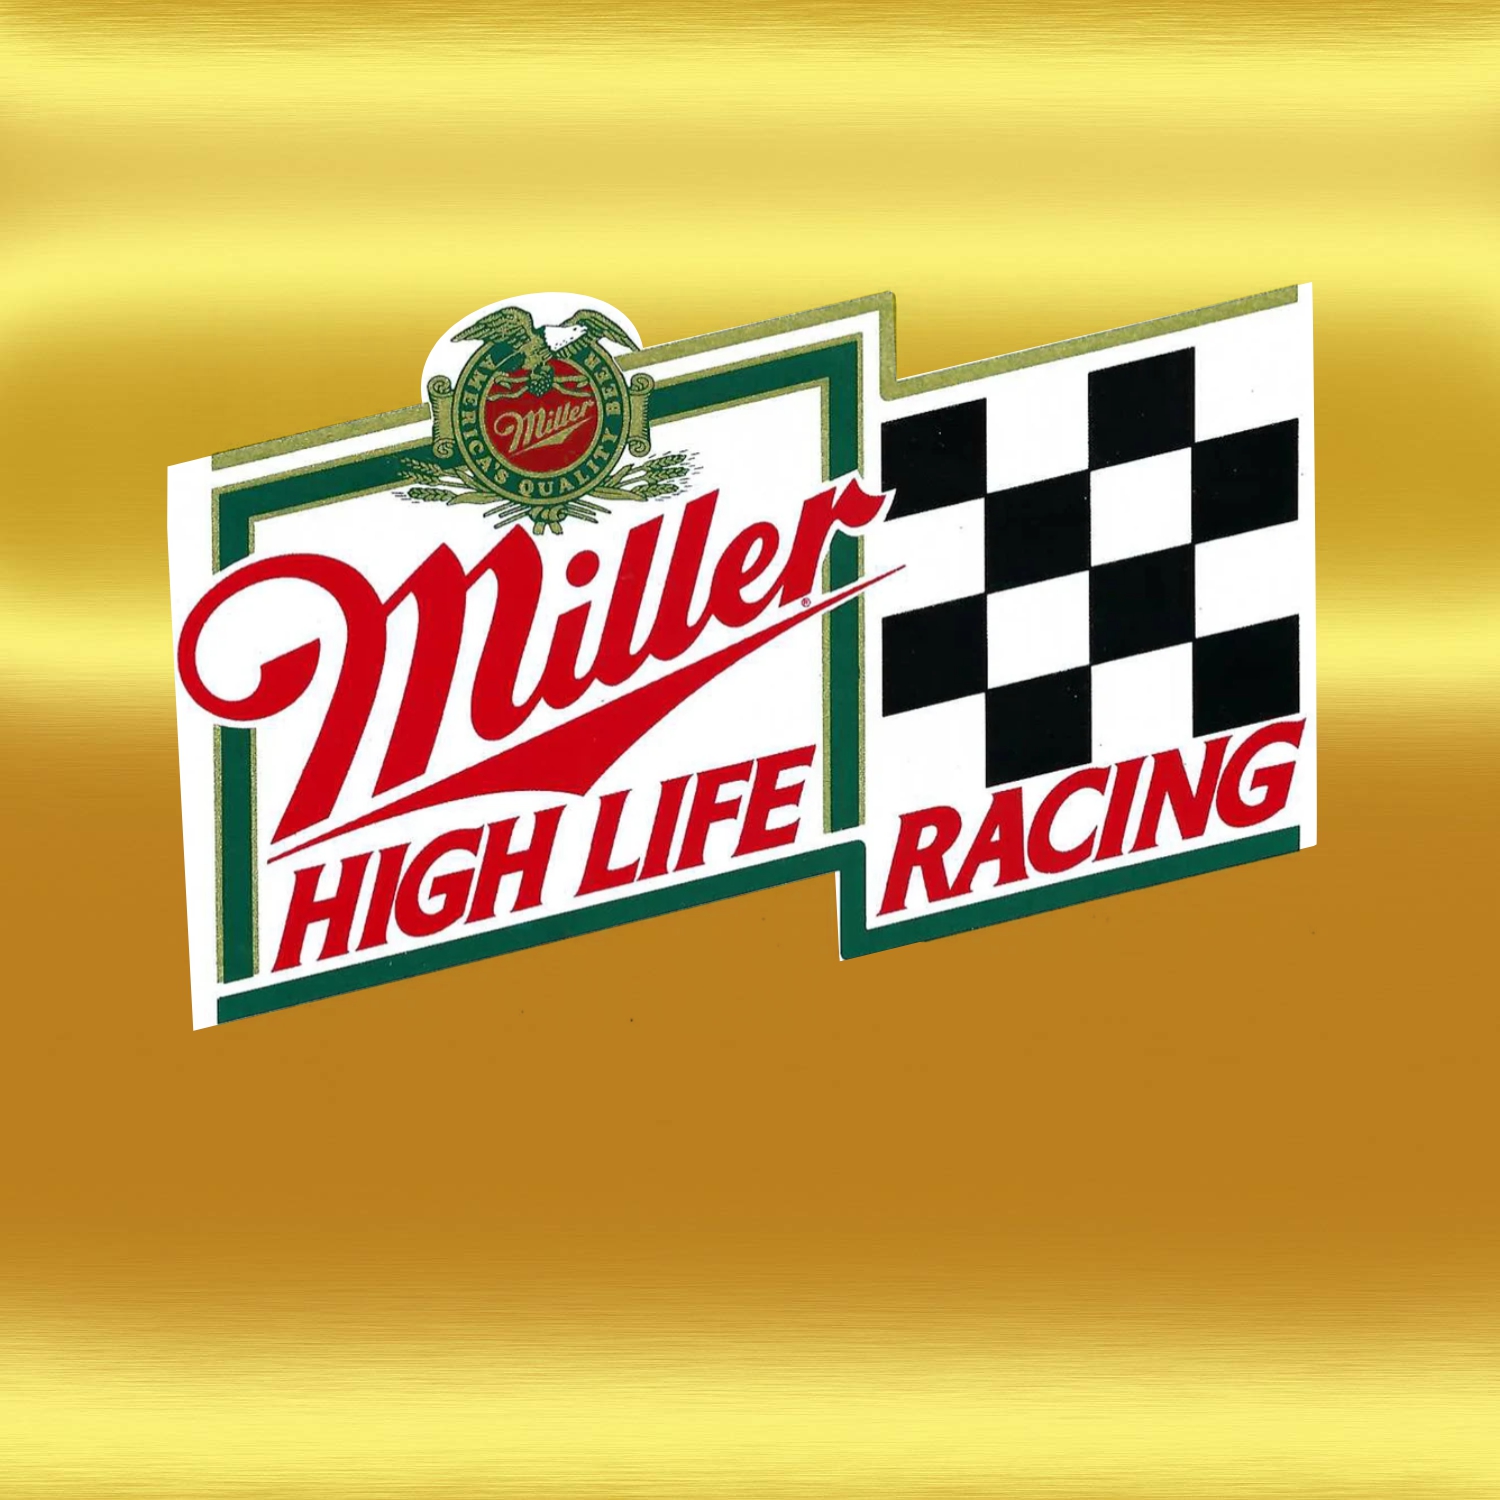 Miller High Life racing logo.jpg